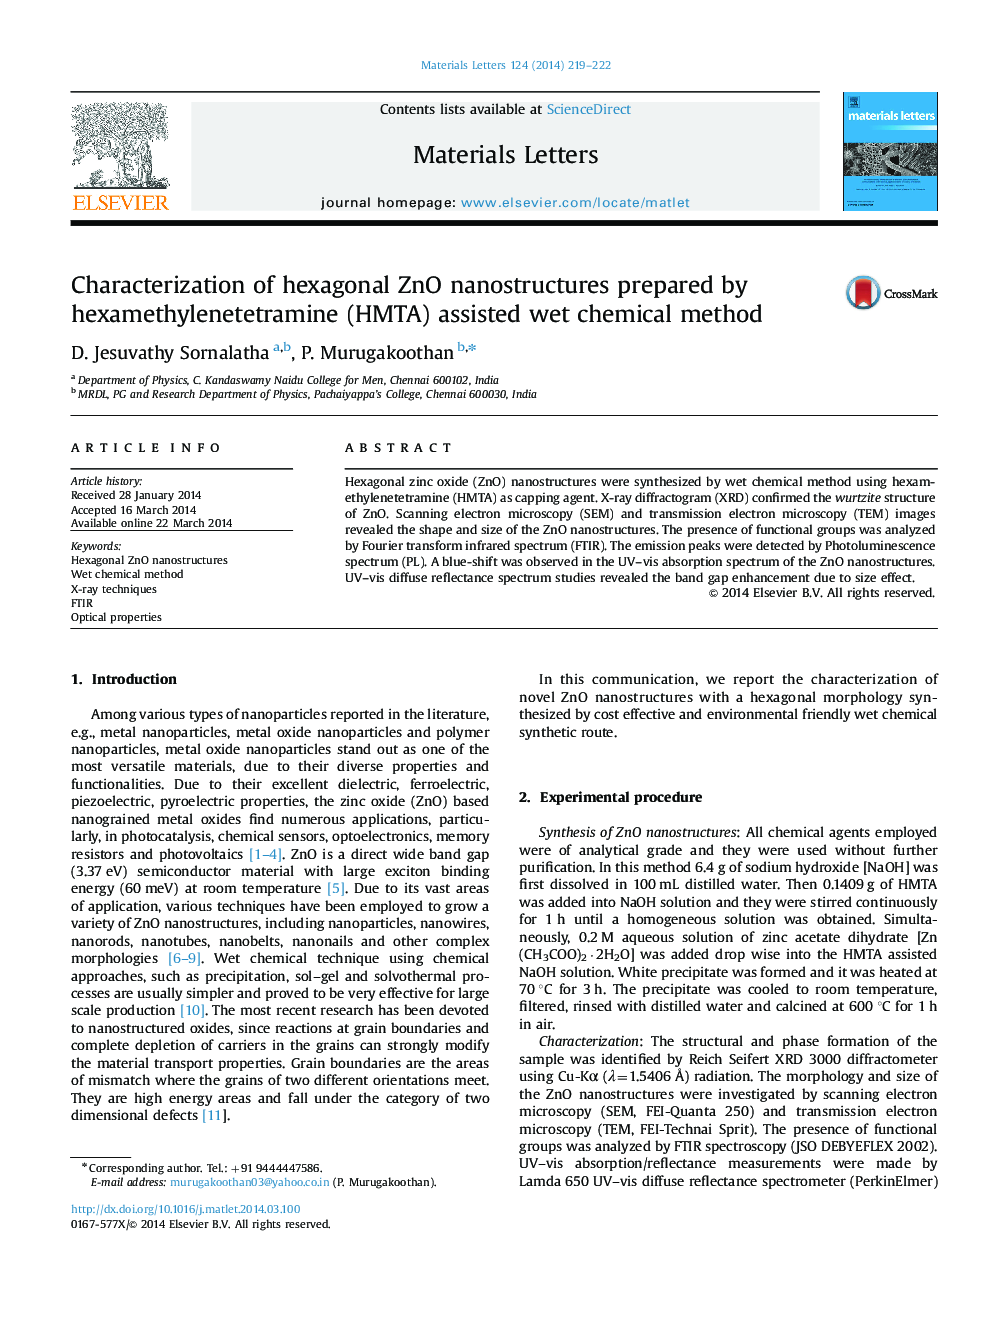 Characterization of hexagonal ZnO nanostructures prepared by hexamethylenetetramine (HMTA) assisted wet chemical method